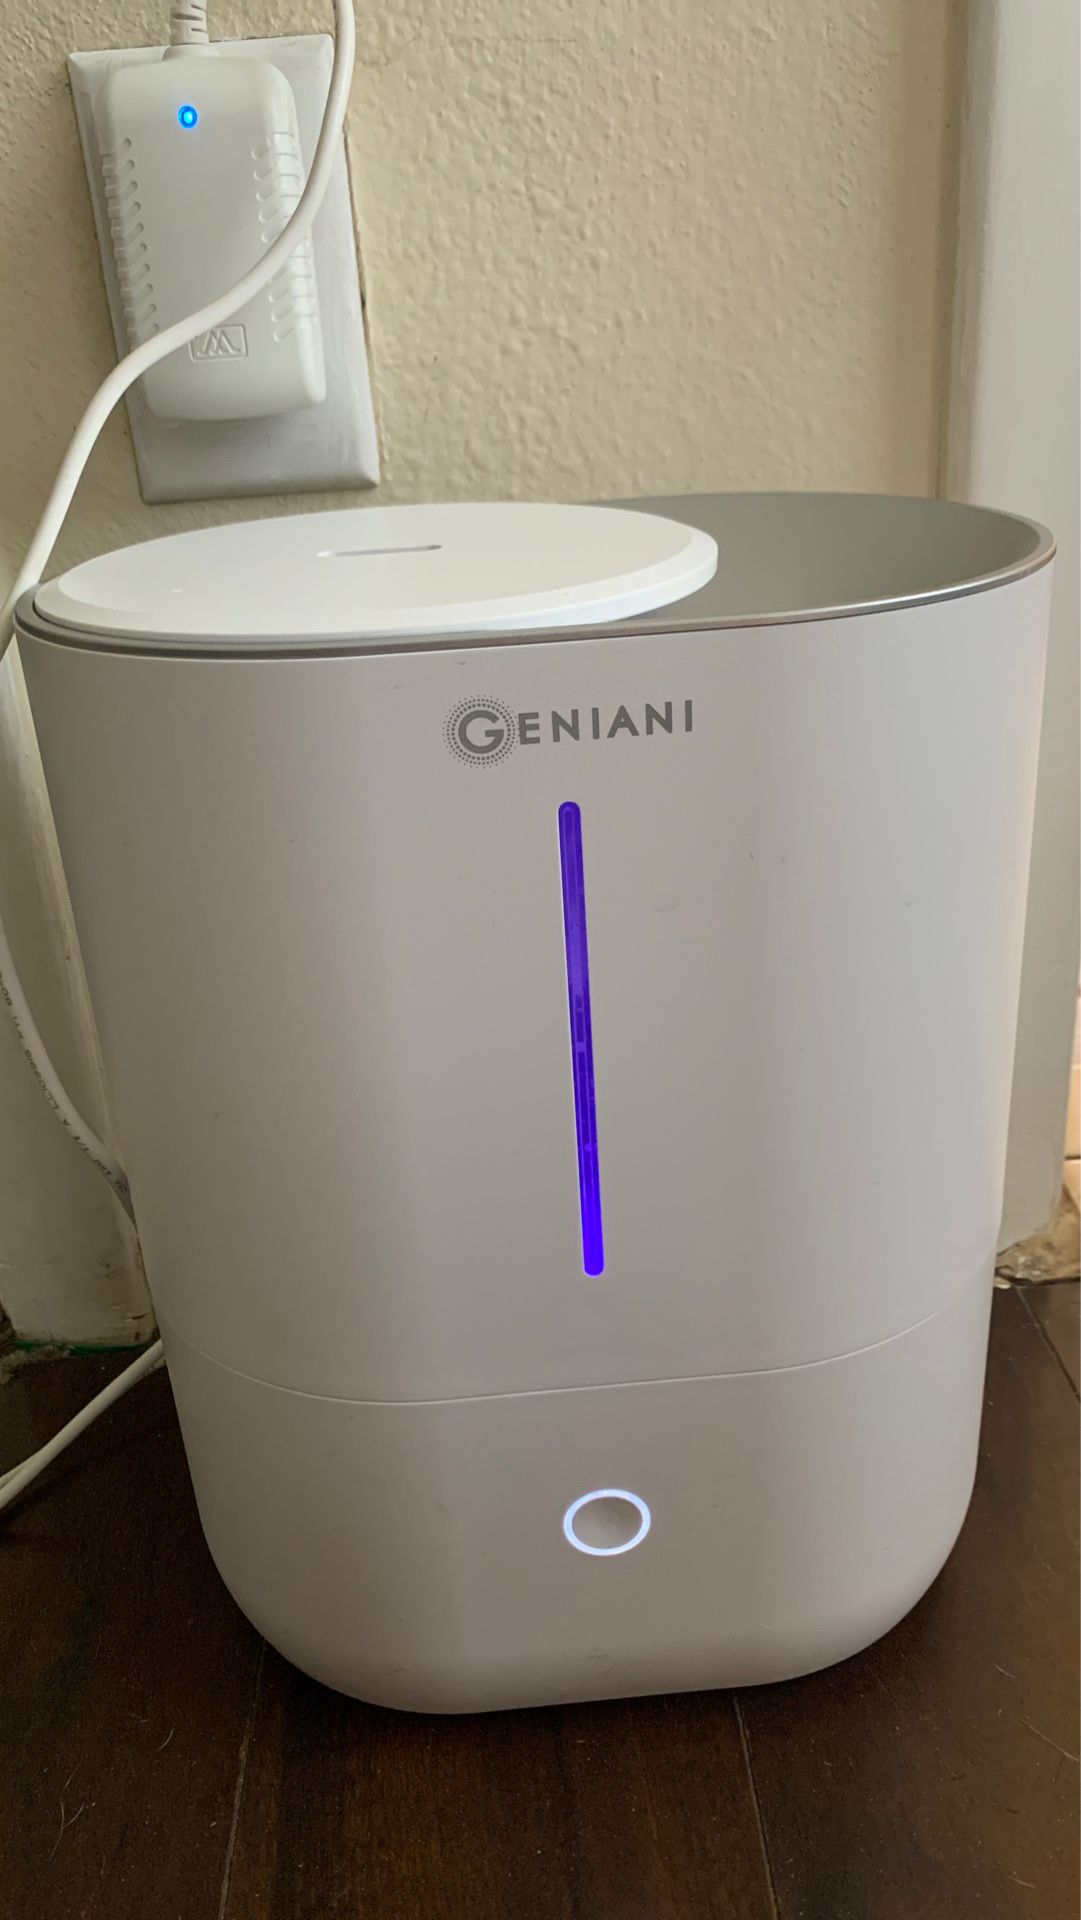 Geniani air humidifier